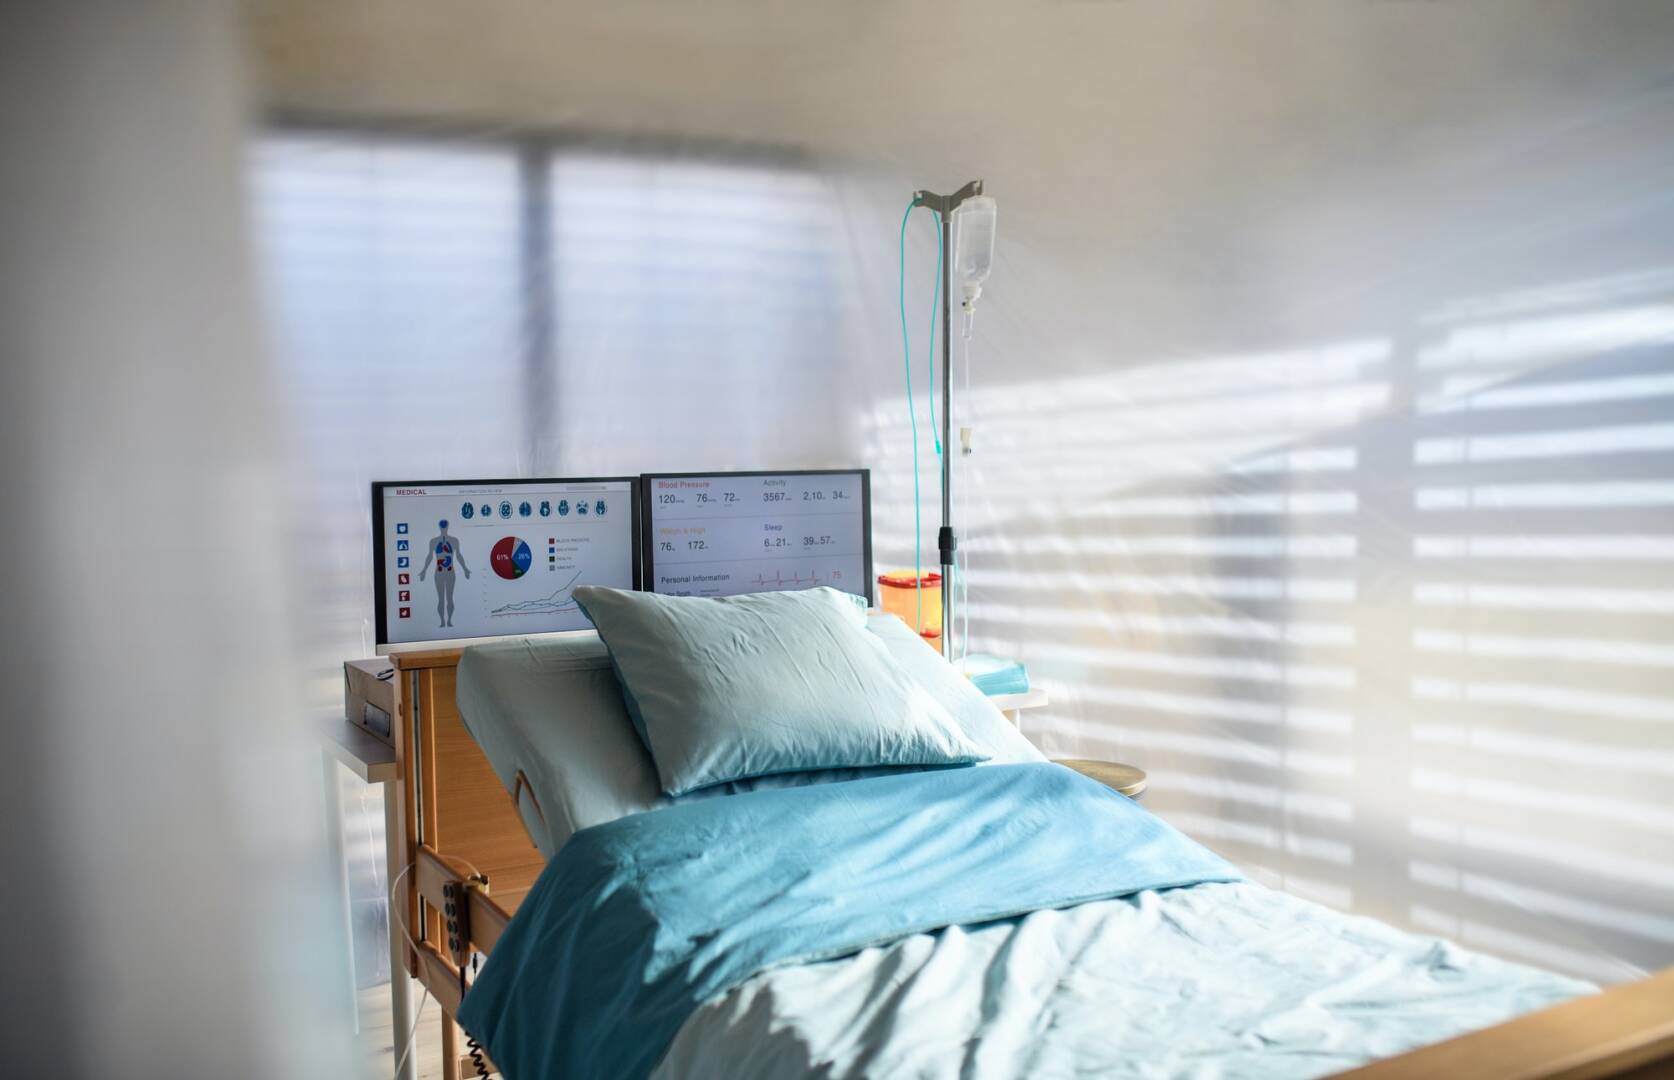 Empty bed in hospital room, coronavirus concept